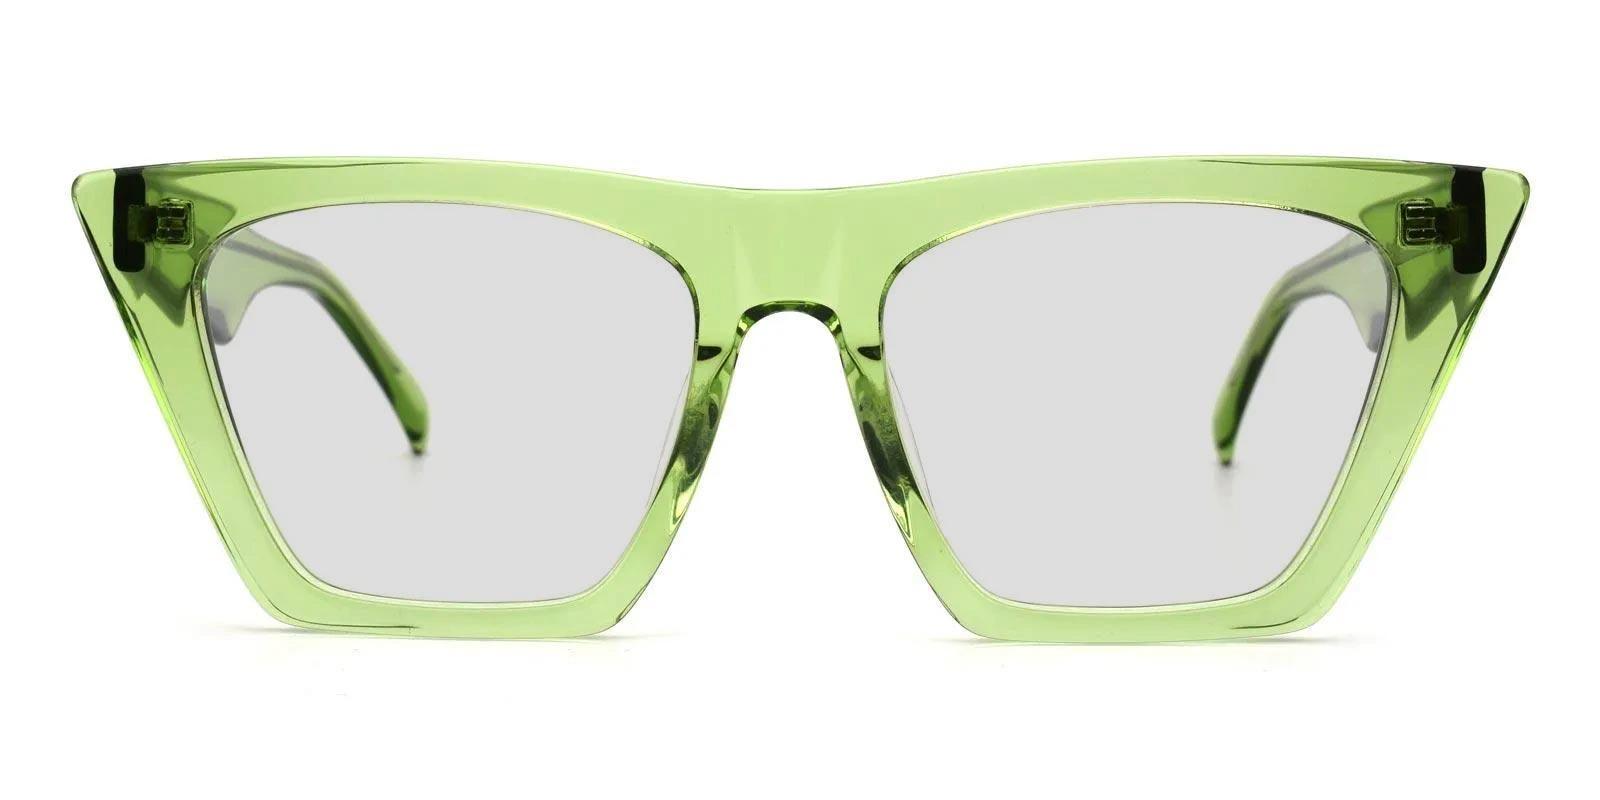 Upature Green Acetate Sunglasses , UniversalBridgeFit Frames from ABBE Glasses